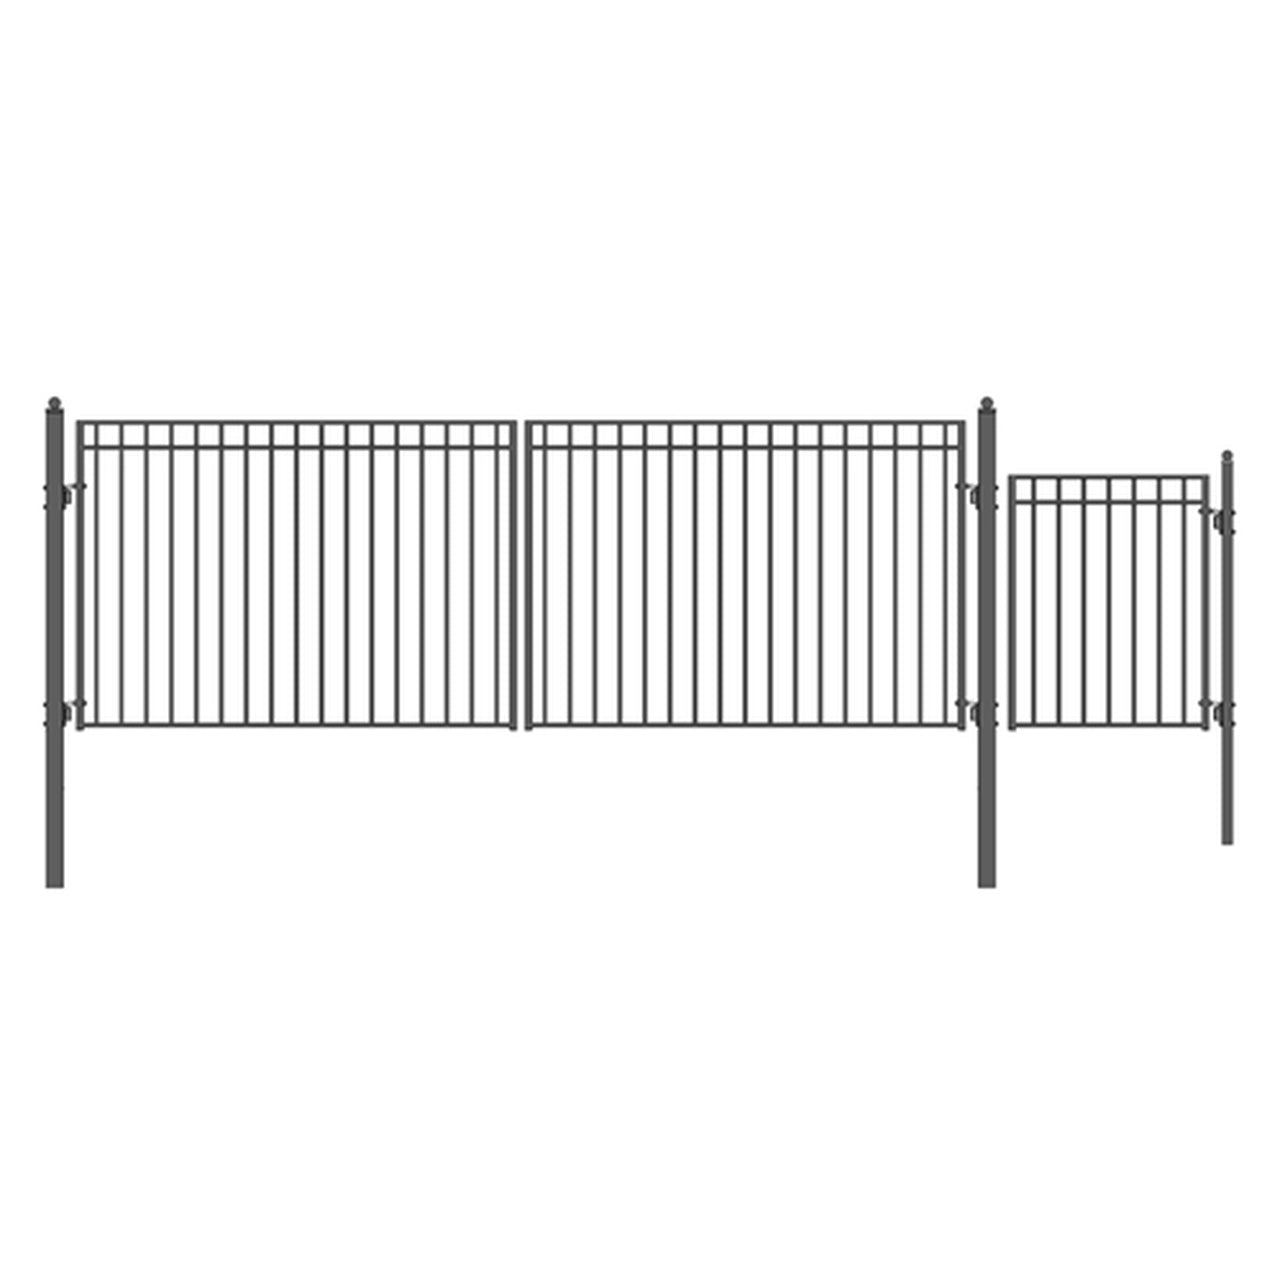 Aleko Steel Dual Swing Driveway Gate - MADRID Style - 18 ft with Pedestrian Gate - 5 ft